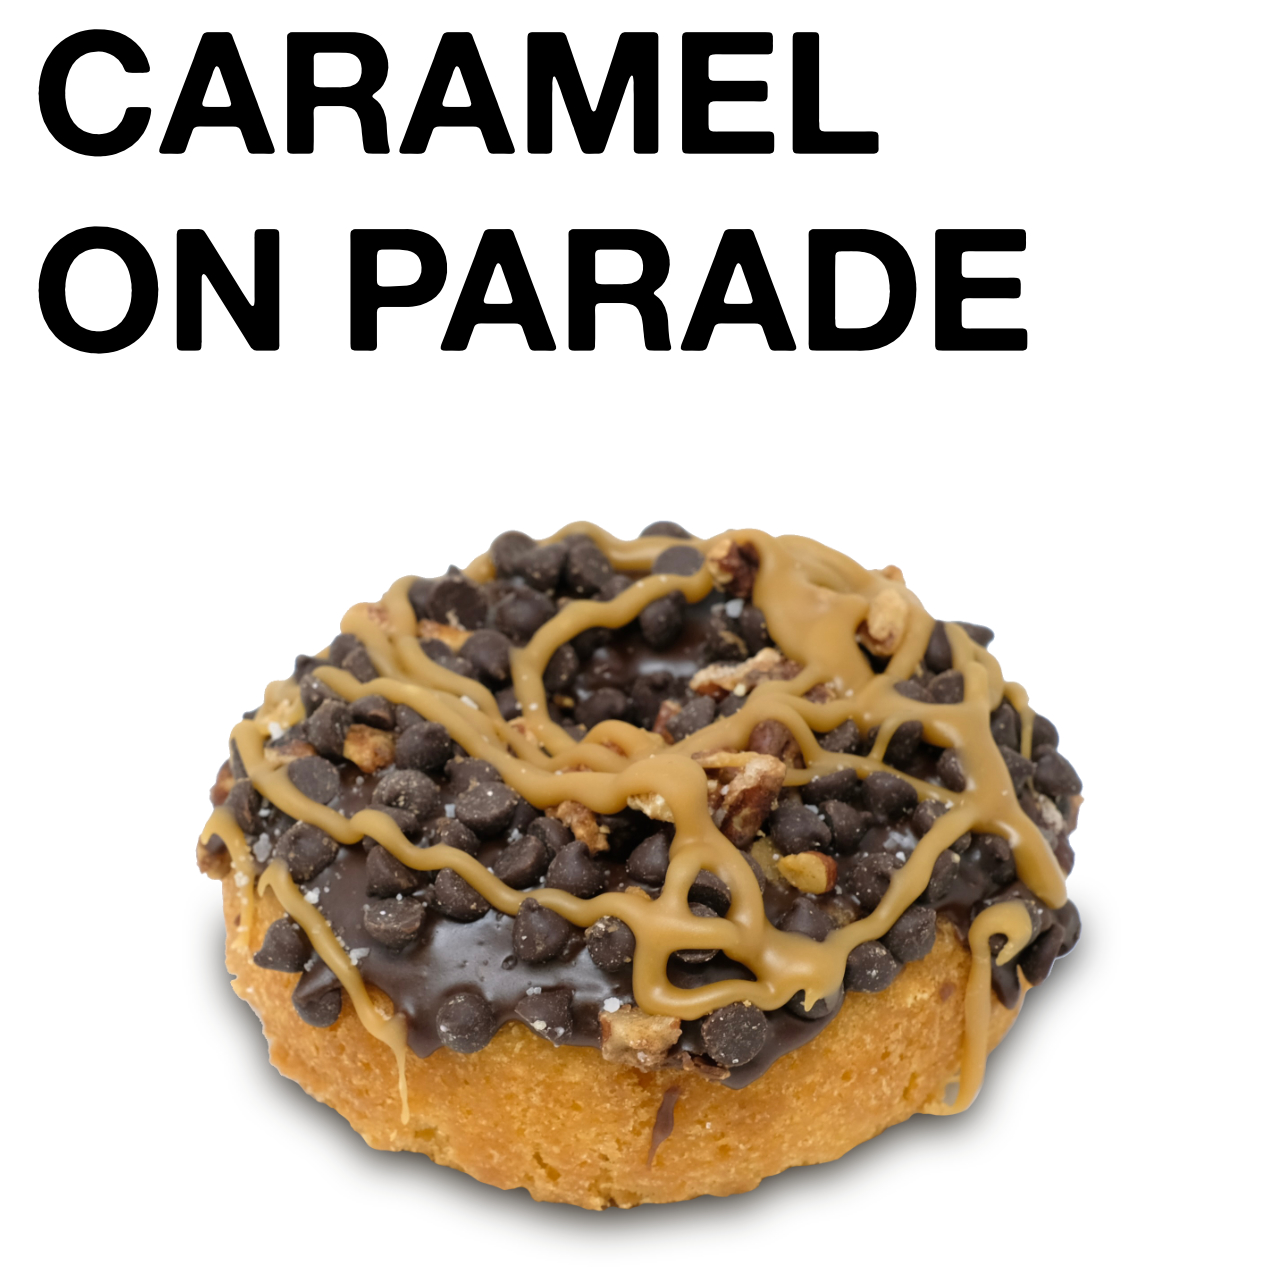 Caramel on Parade